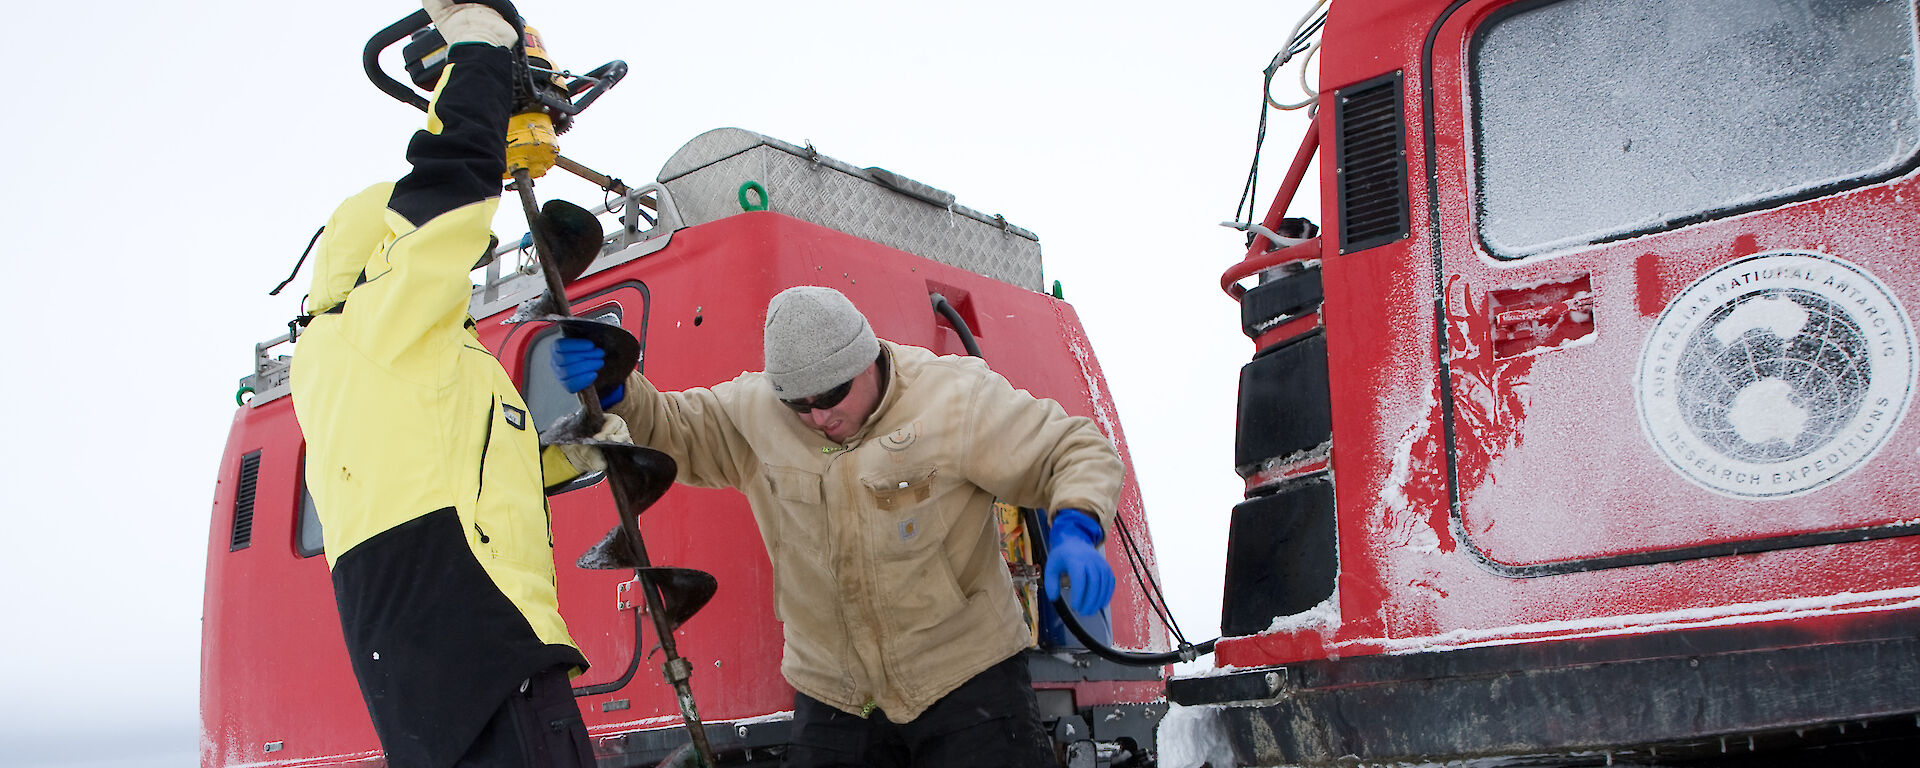 Kym Newbery using an ice drill in Antarctica